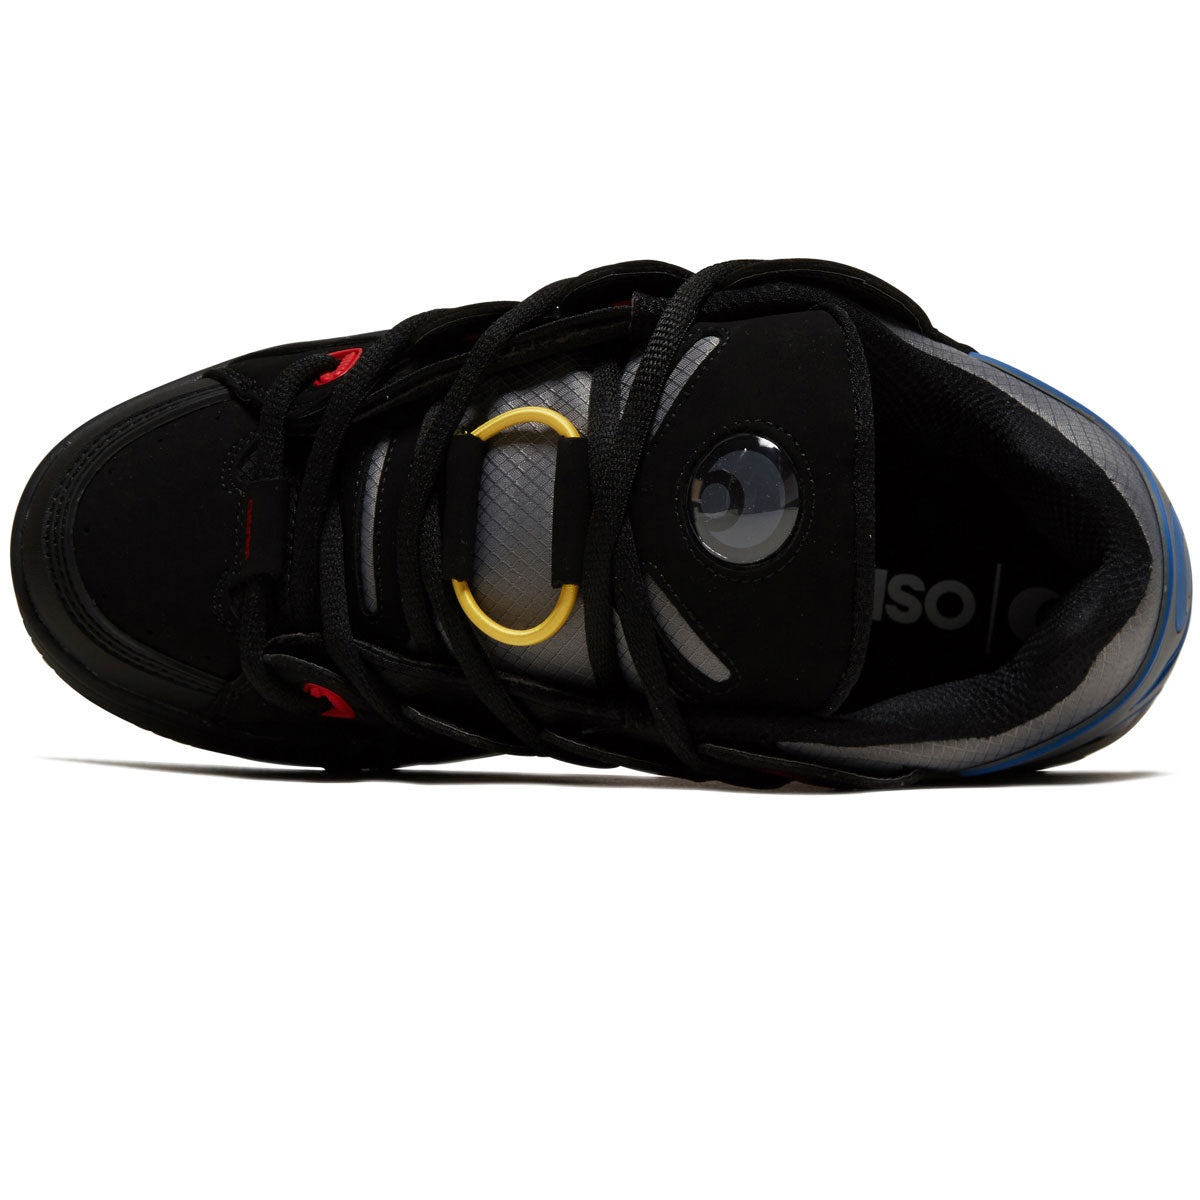 Osiris D3 OG Shoes - Black/Yellow/Red image 3